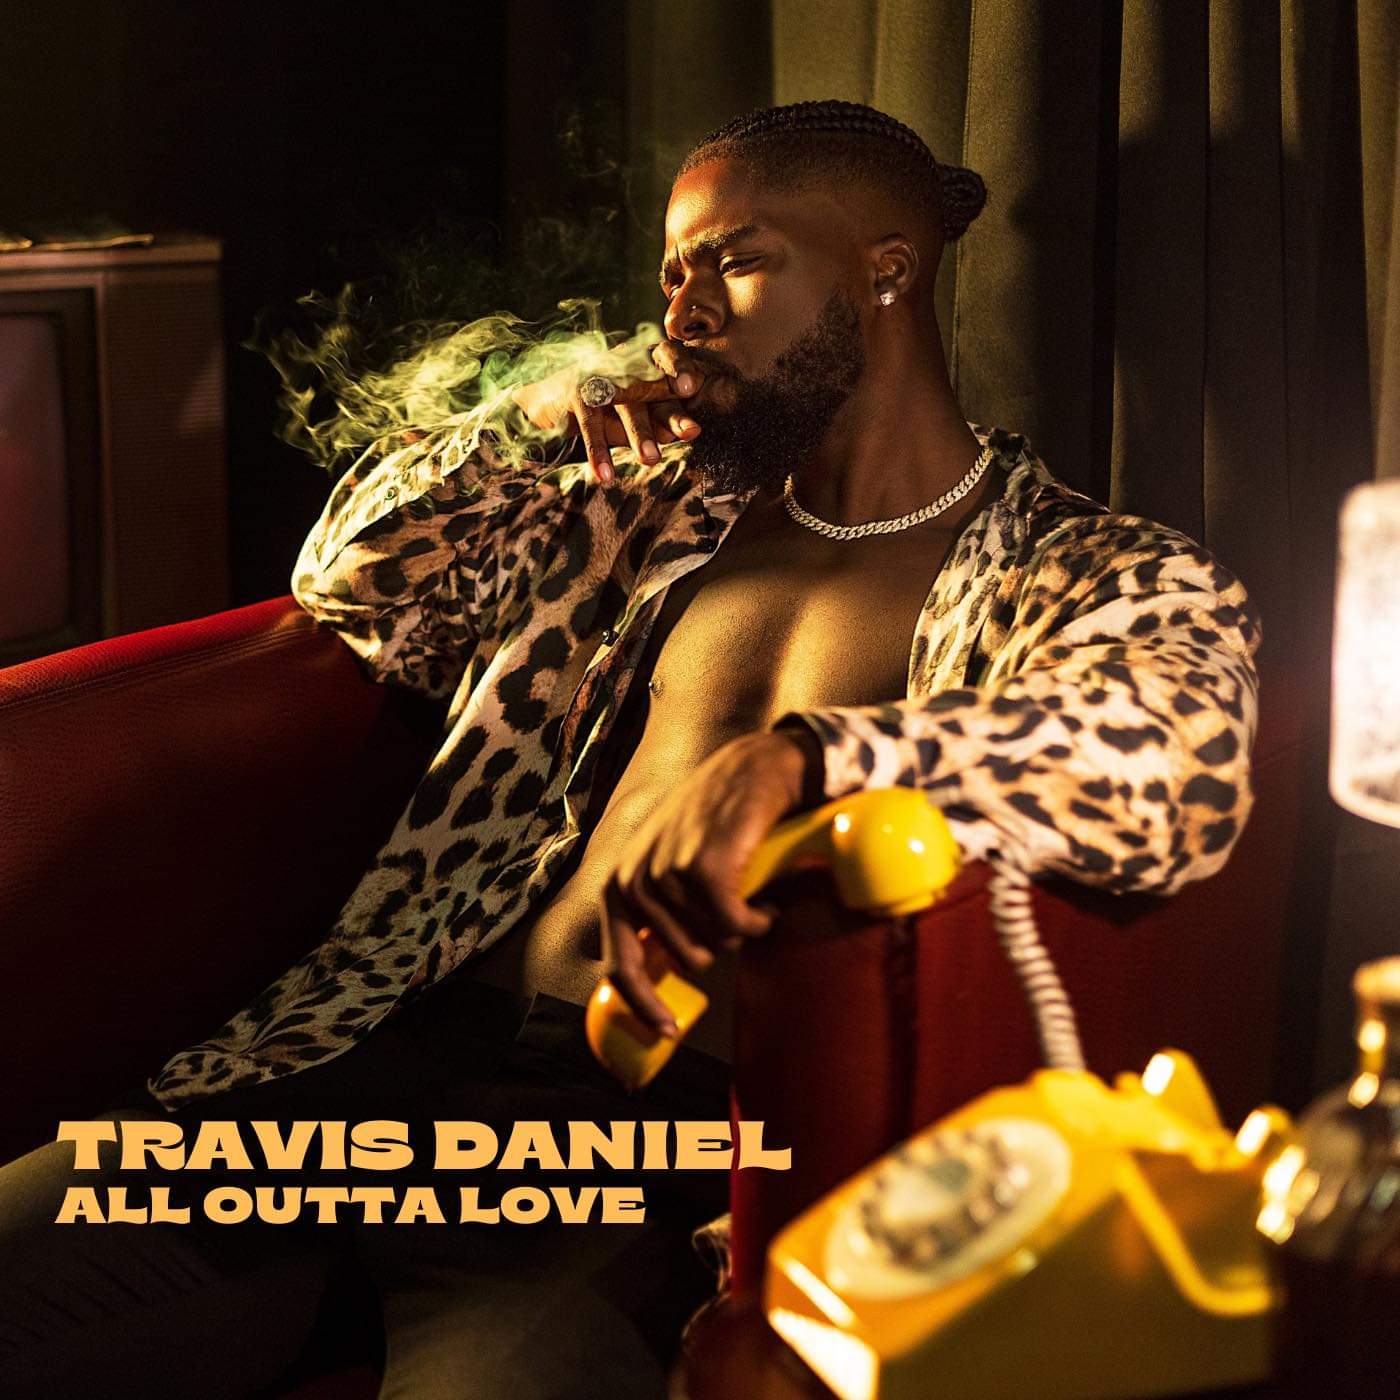 Travis Daniel All Outta Love